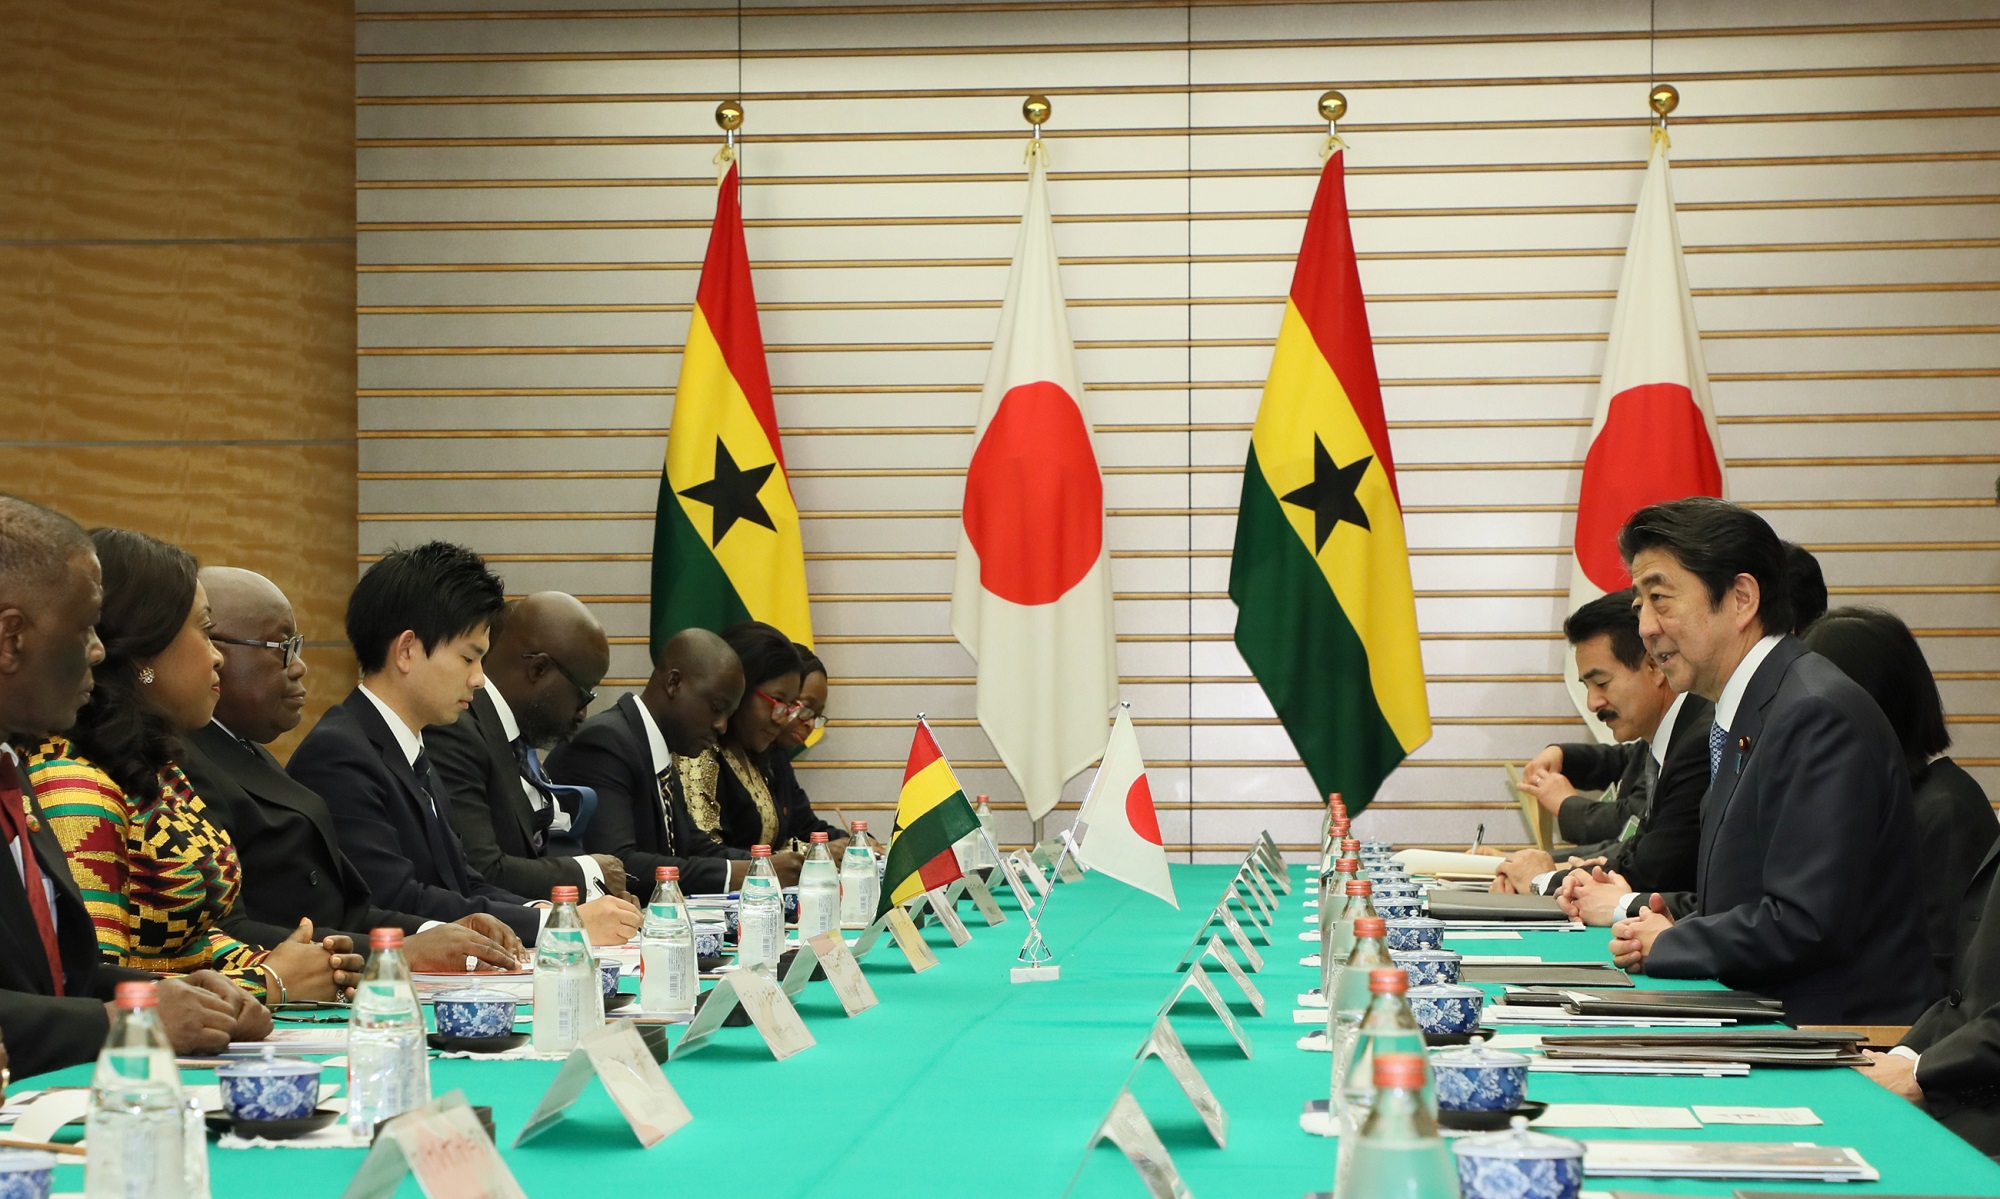 Photograph of the Japan-Ghana Summit Meeting